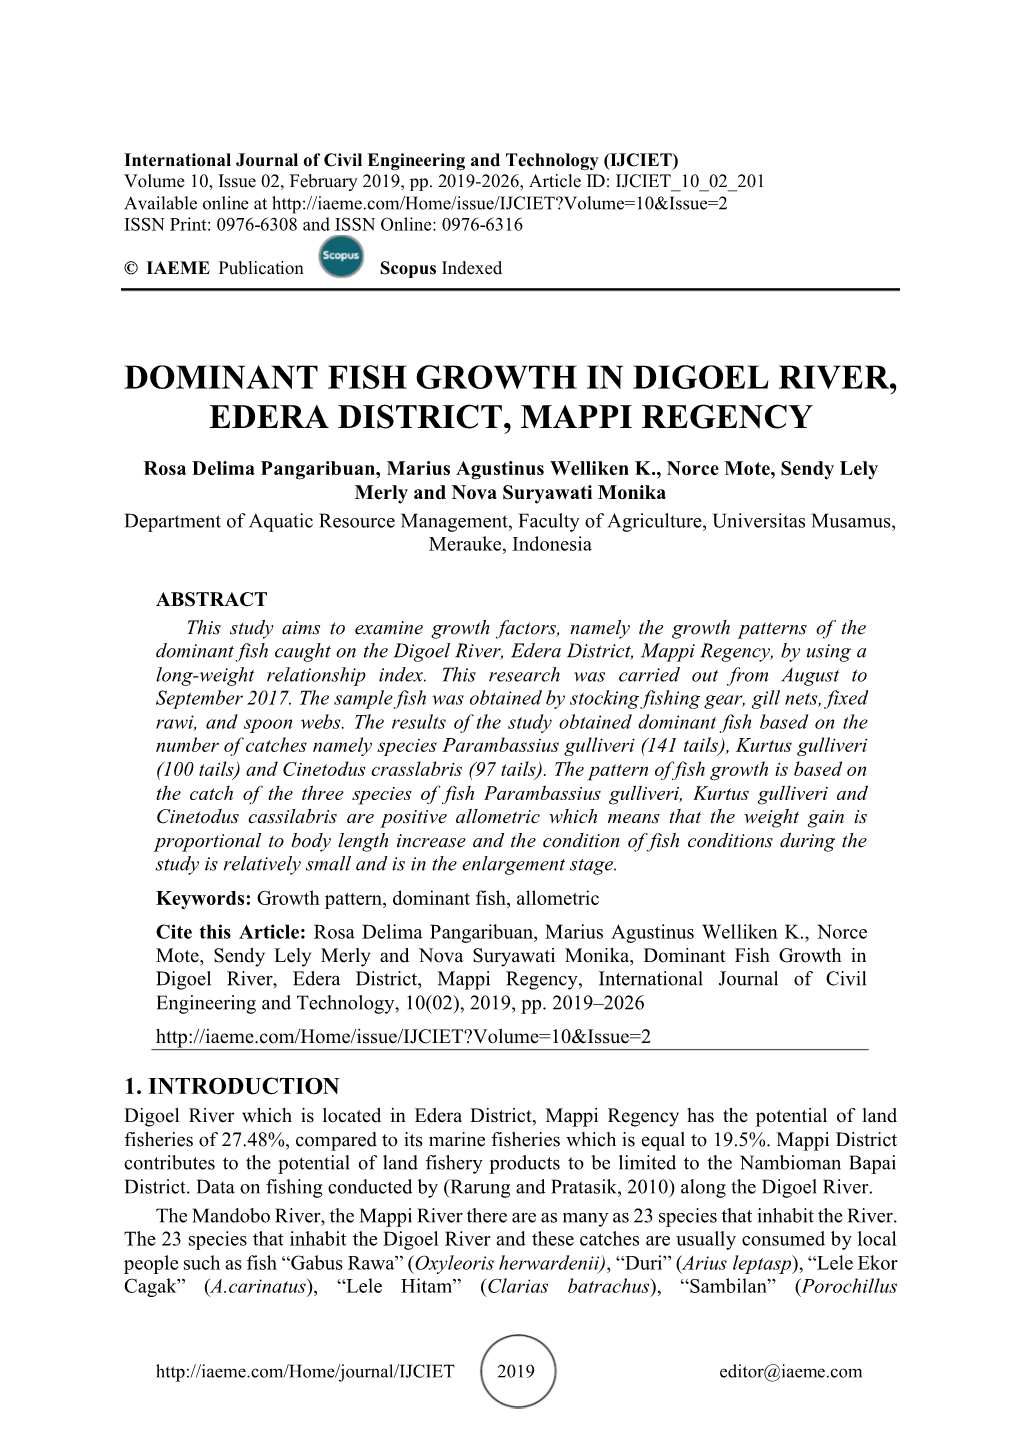 Dominant Fish Growth in Digoel River, Edera District, Mappi Regency